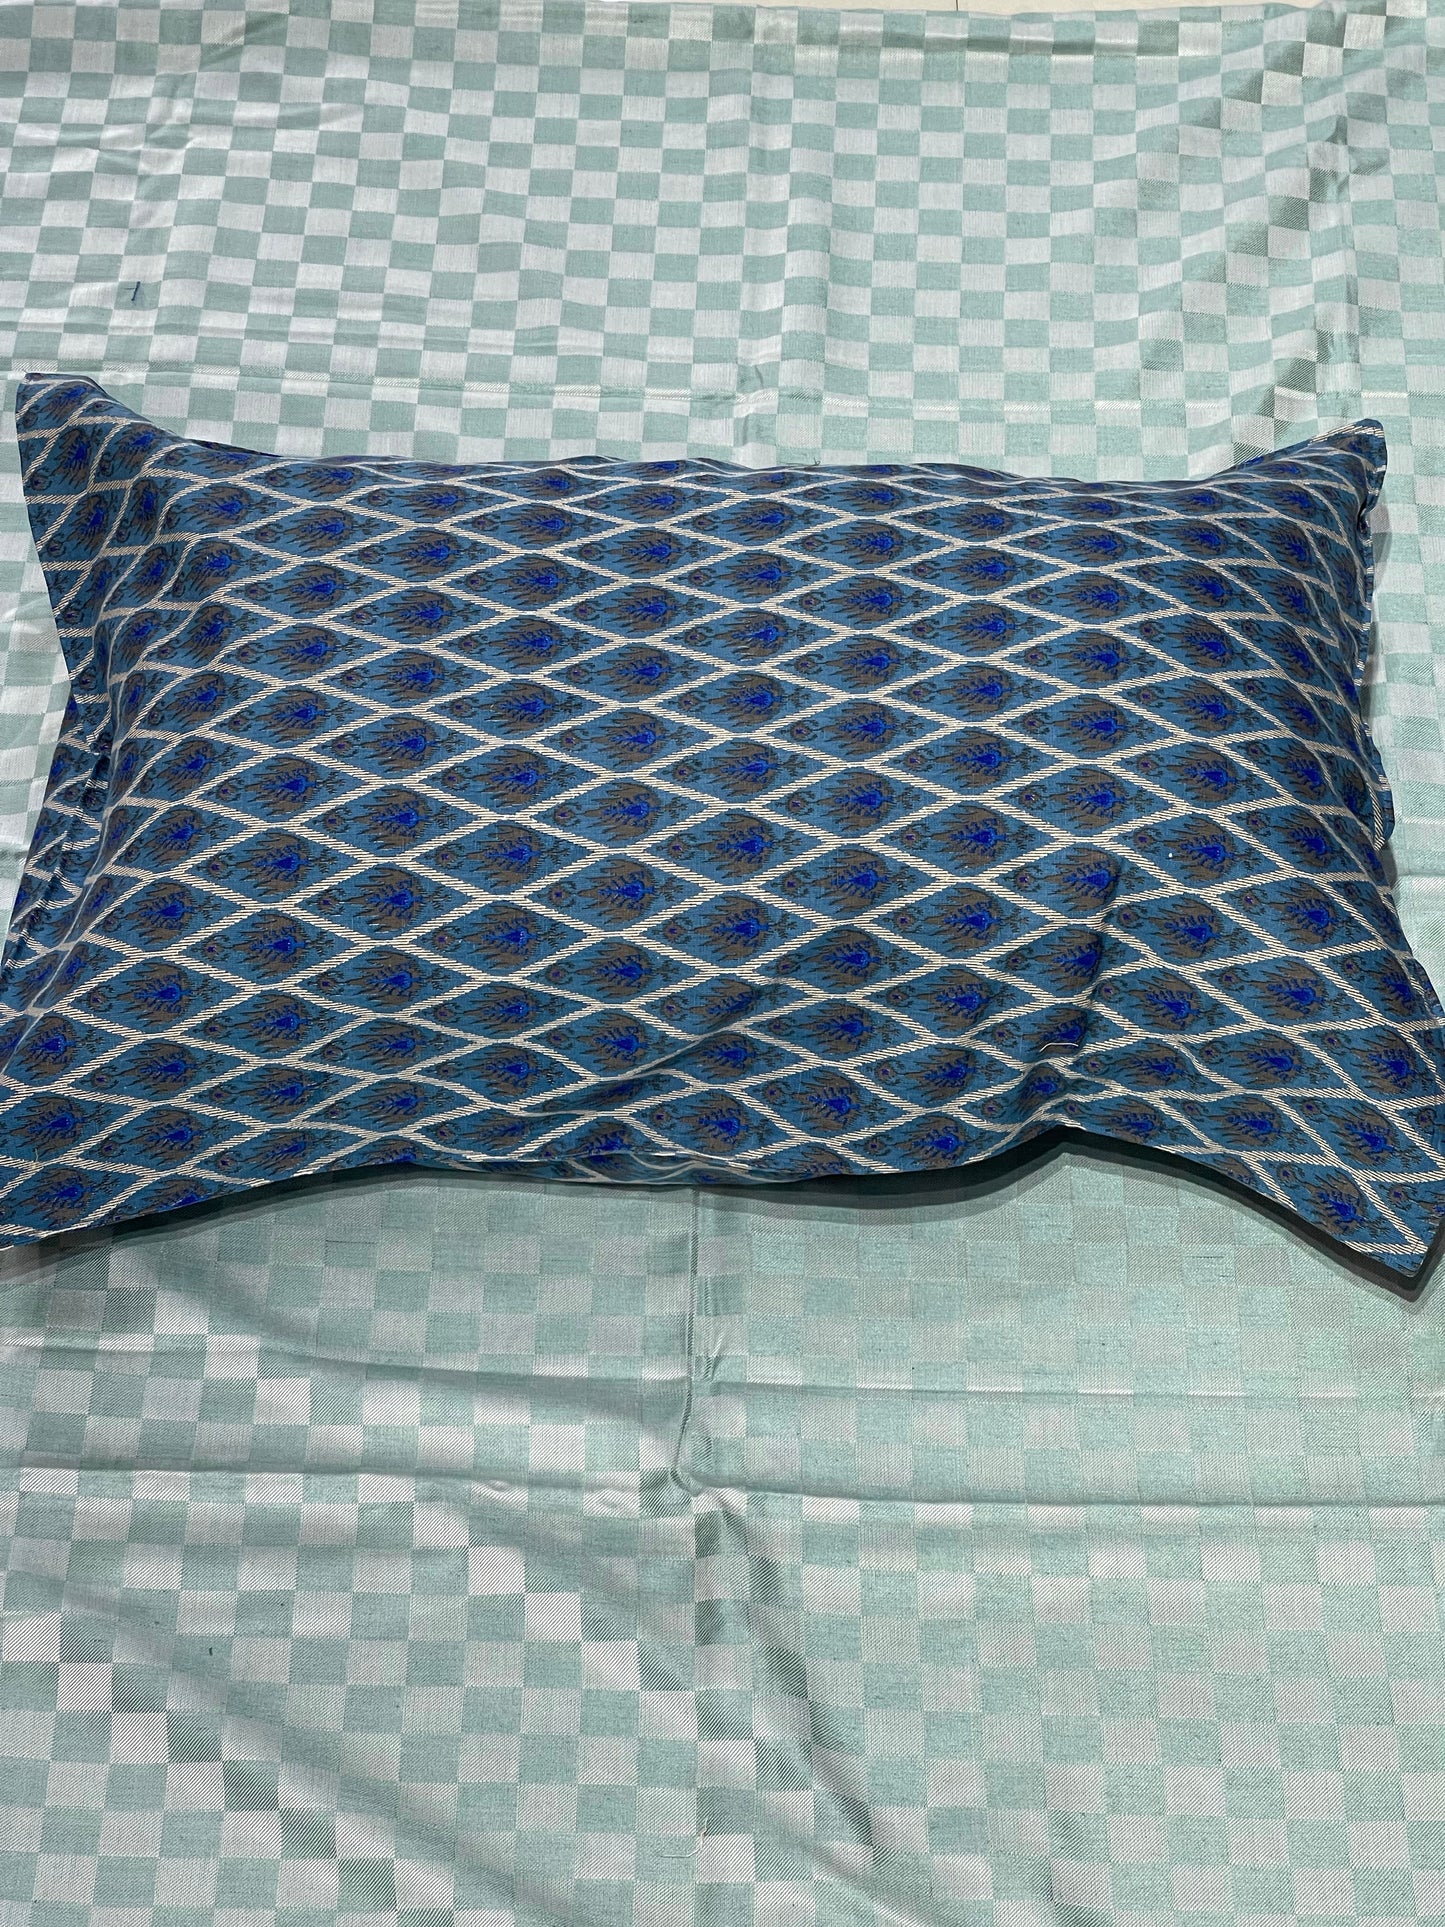 Blue diamond printed pillow covers